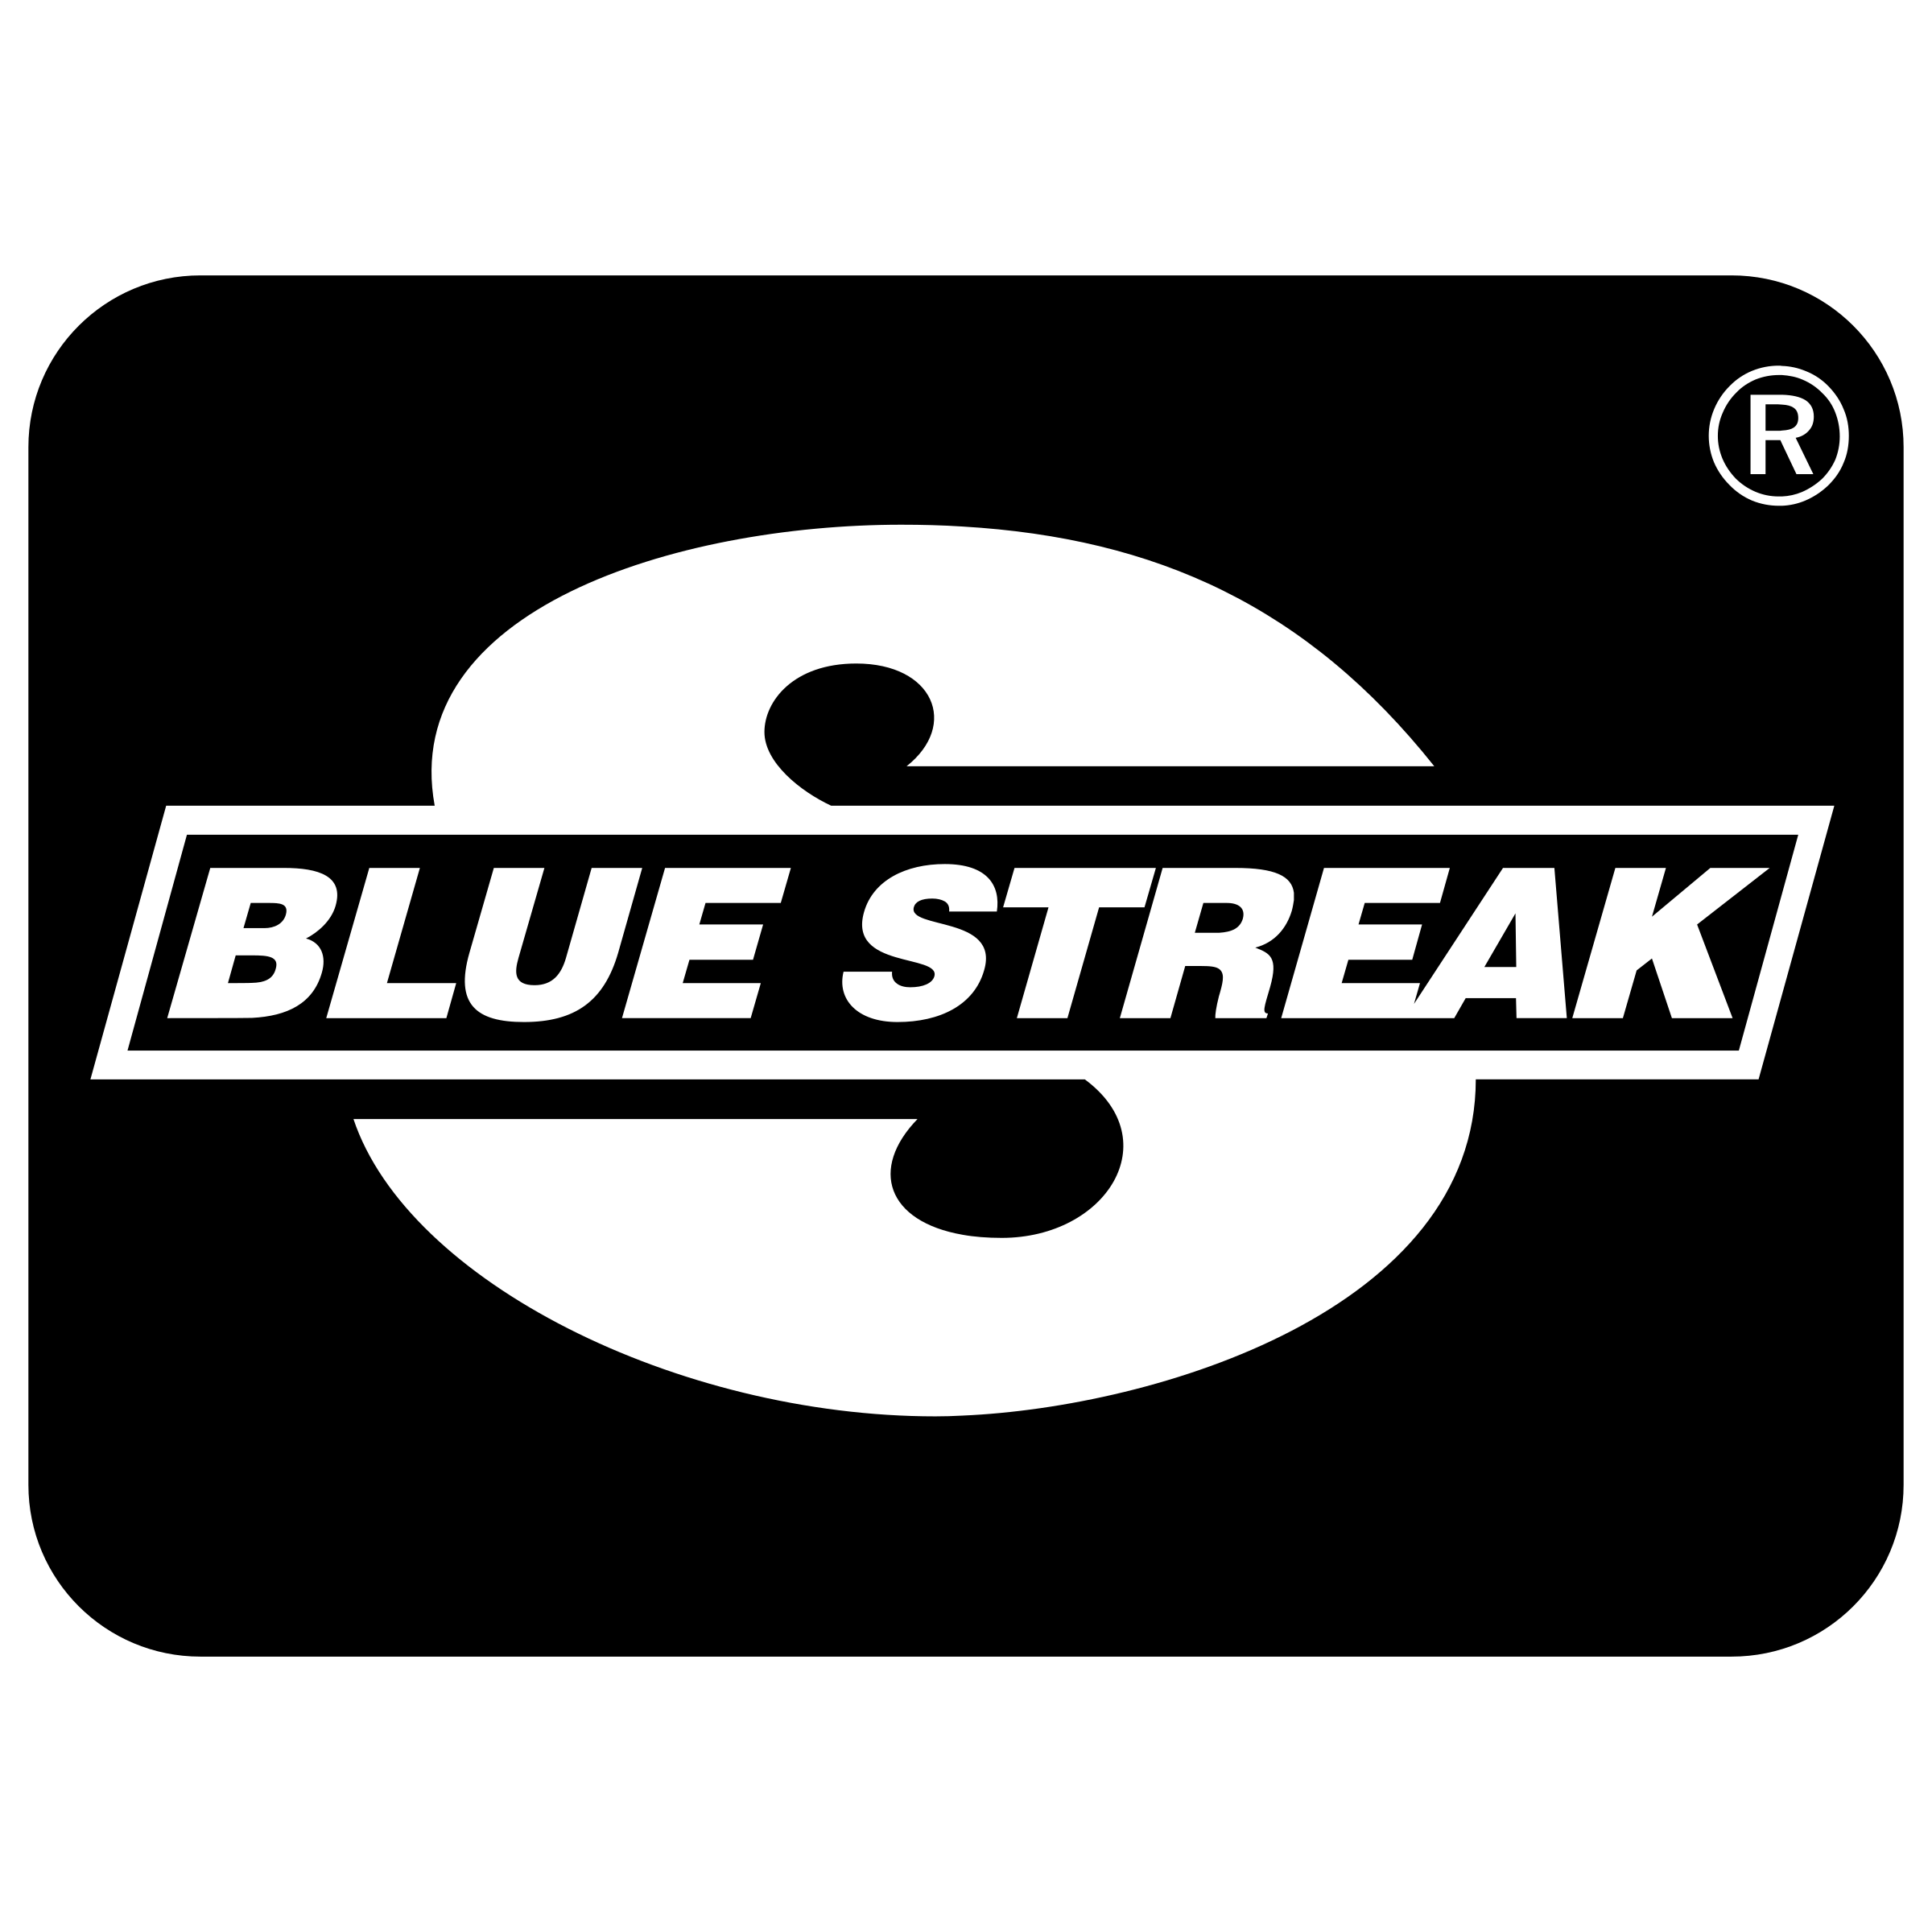 Bluestreak Logo - Blue Streak Logo PNG Transparent & SVG Vector